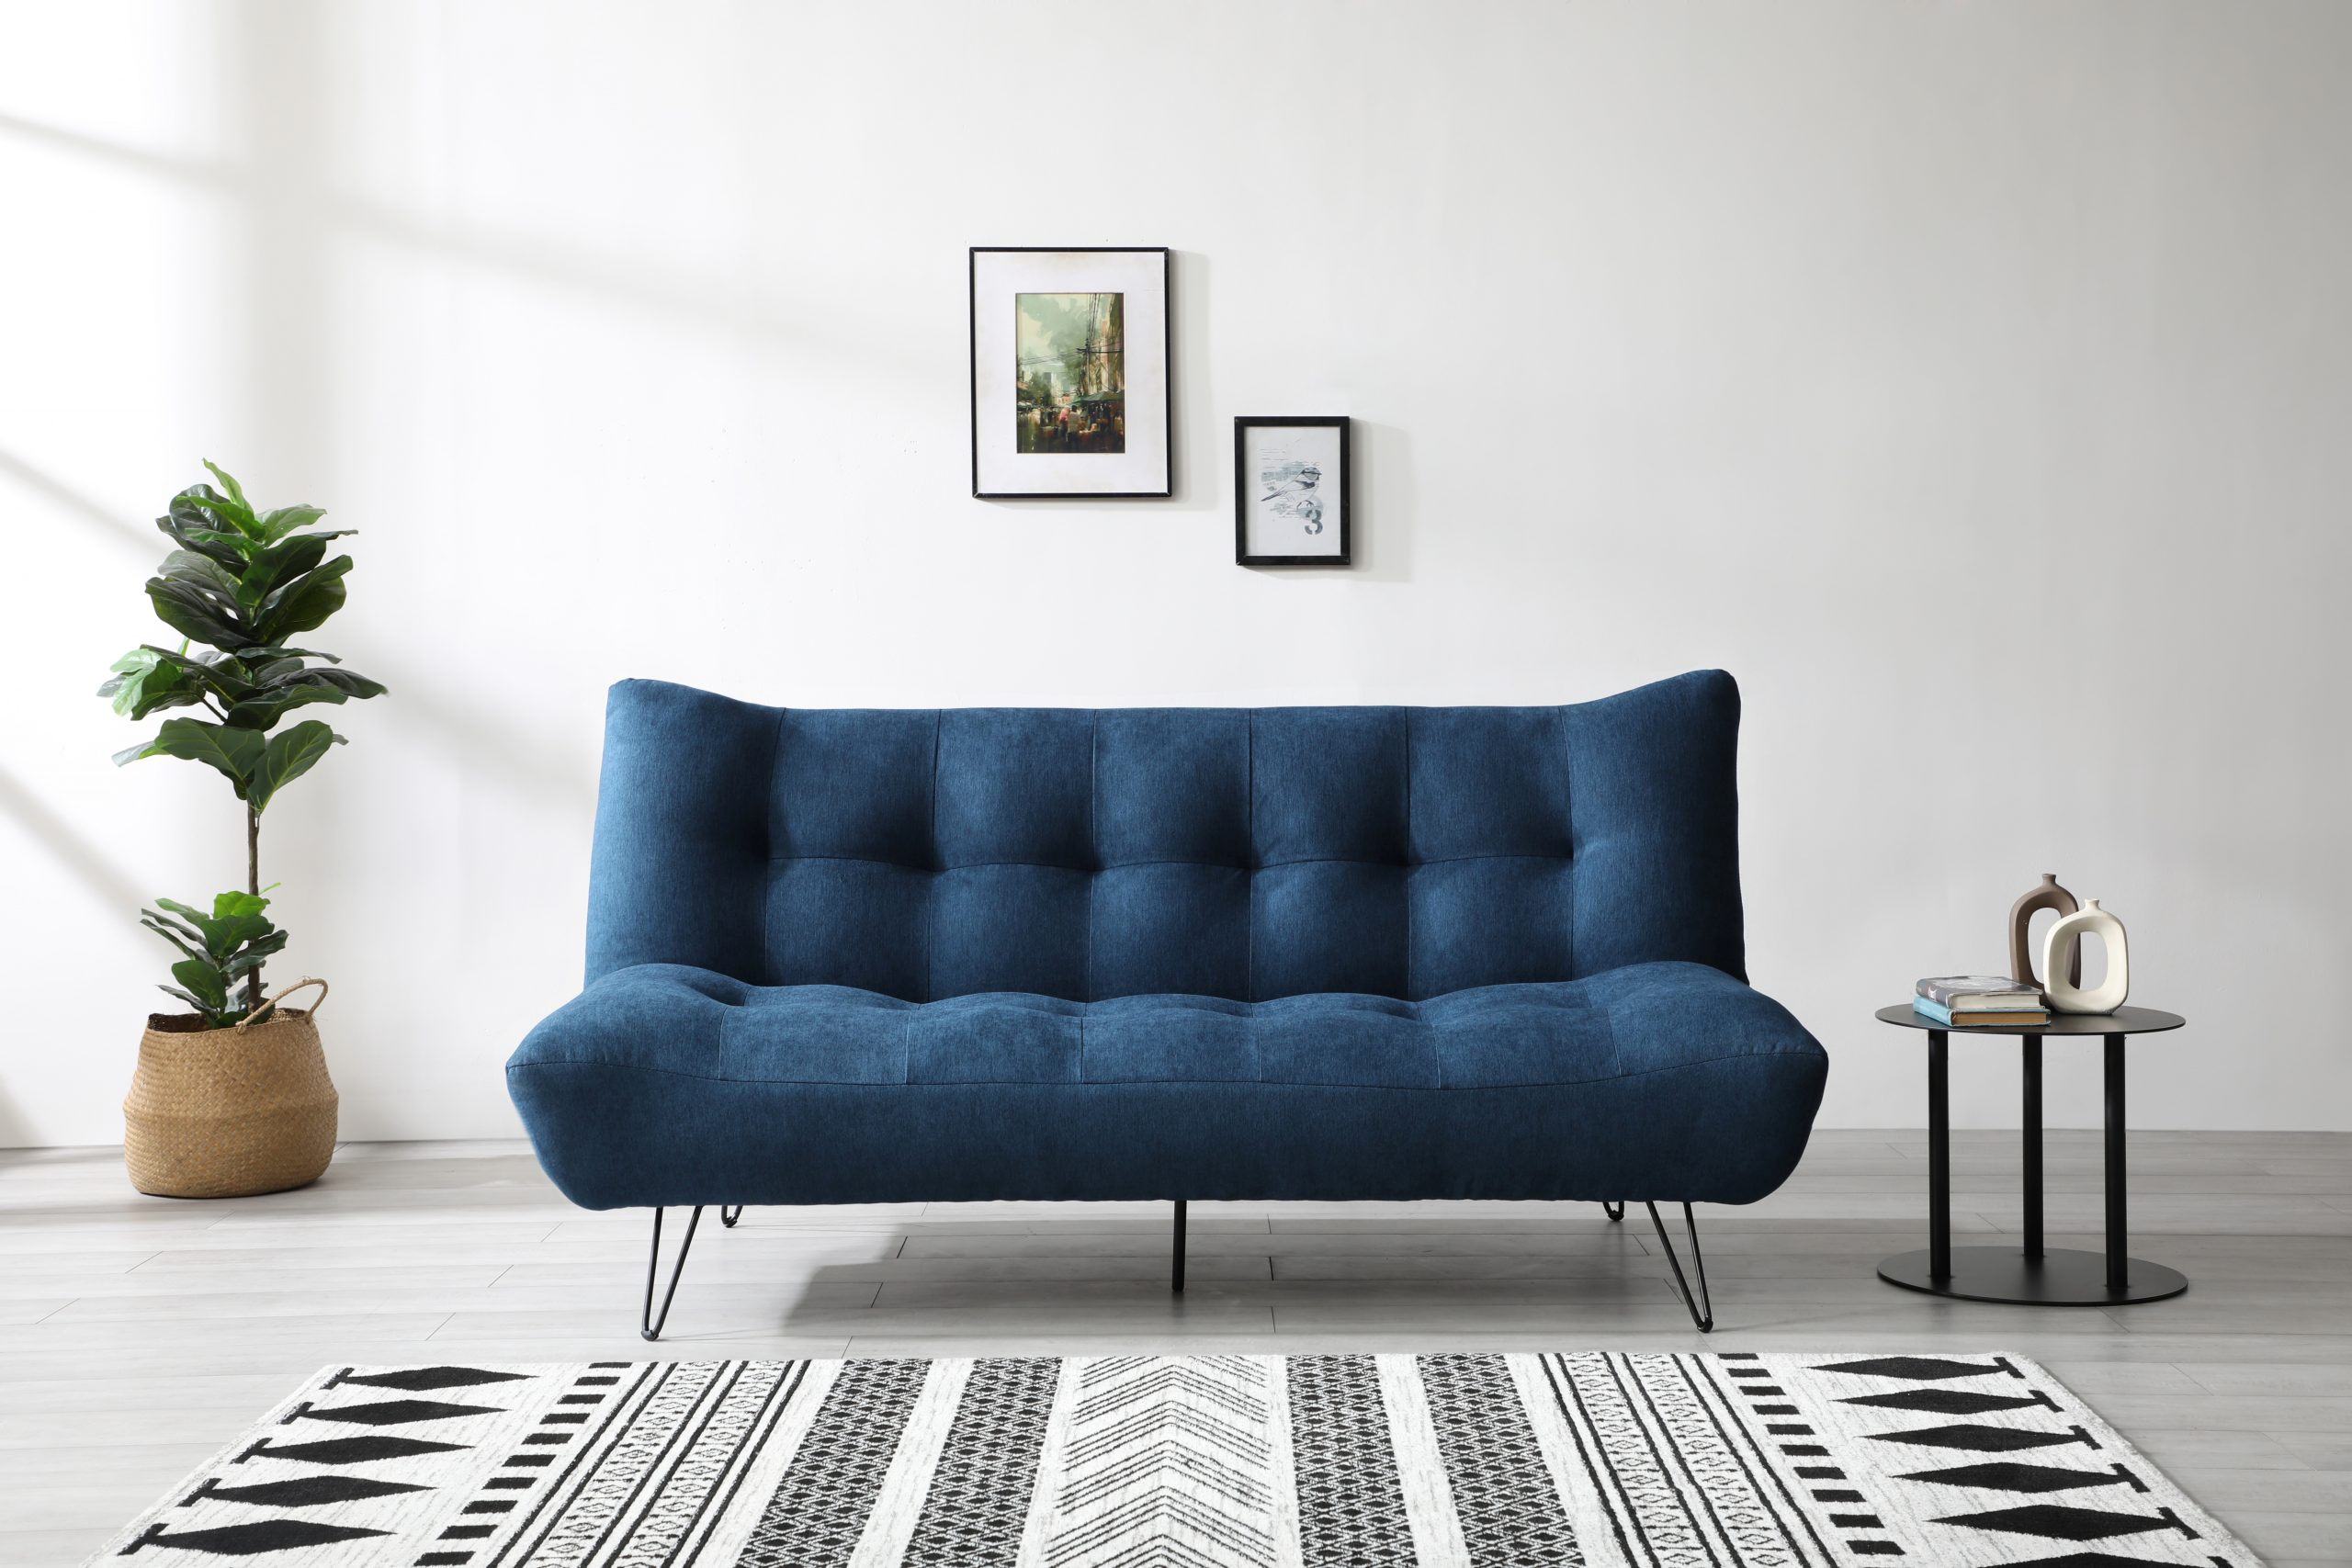 Min Medicina Forense Precursor Cloud Folding Sofa Bed - Blue | Willoby's Furniture Co